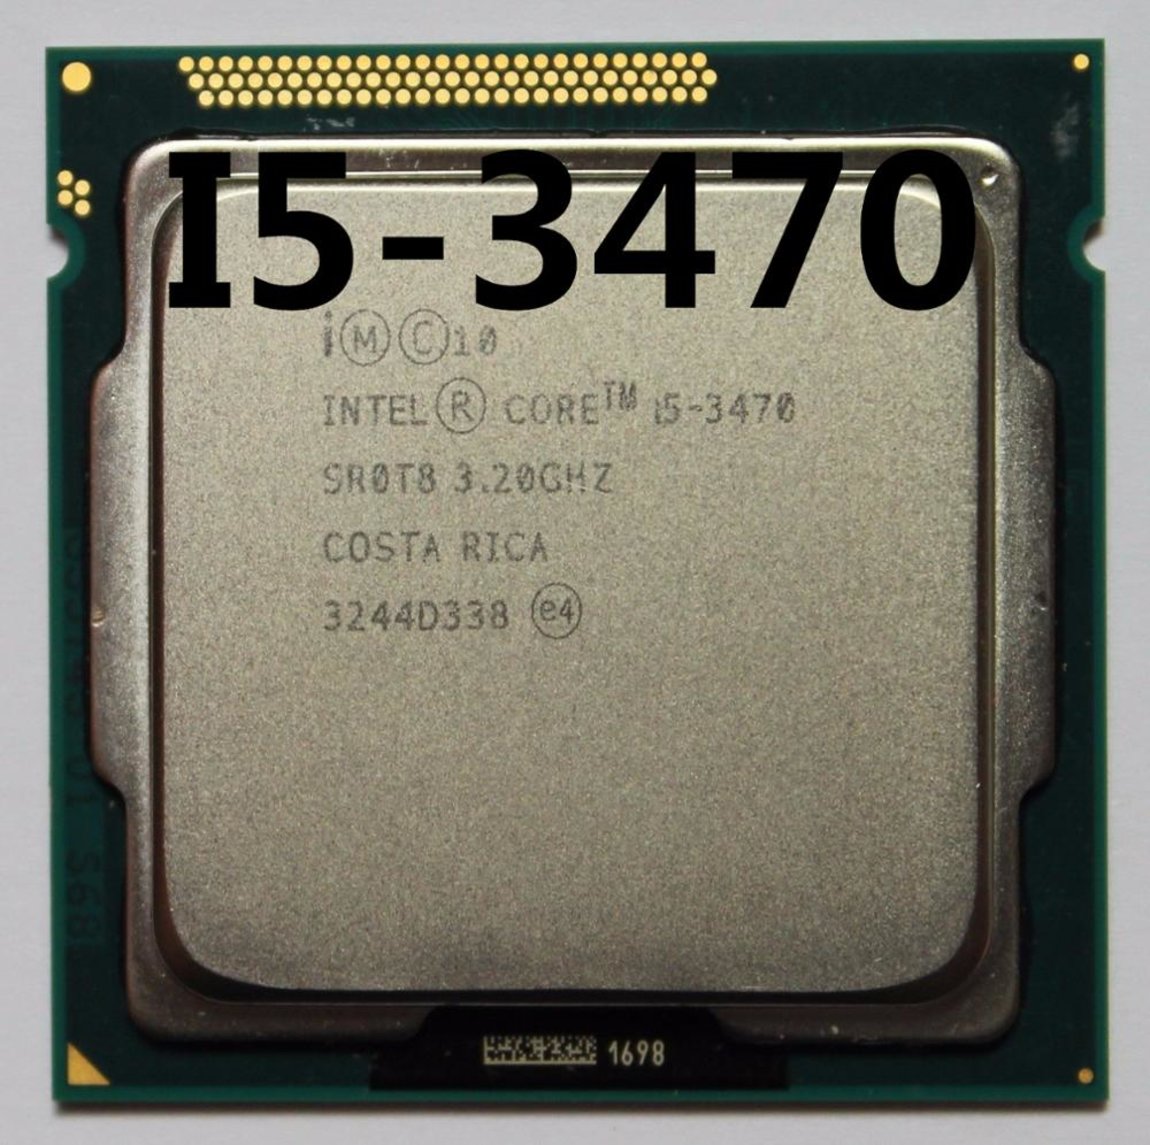 Интел 3470. Intel Core i5 3470 3.2GHZ. Процессор Intel Core i5-3470 3.2GHZ lga1155. Процессор Intel Core i5 3470 LGA 1155. Процессор: Intel Core i5 3470 @ 3.2 ГГЦ (четырехъядерный).